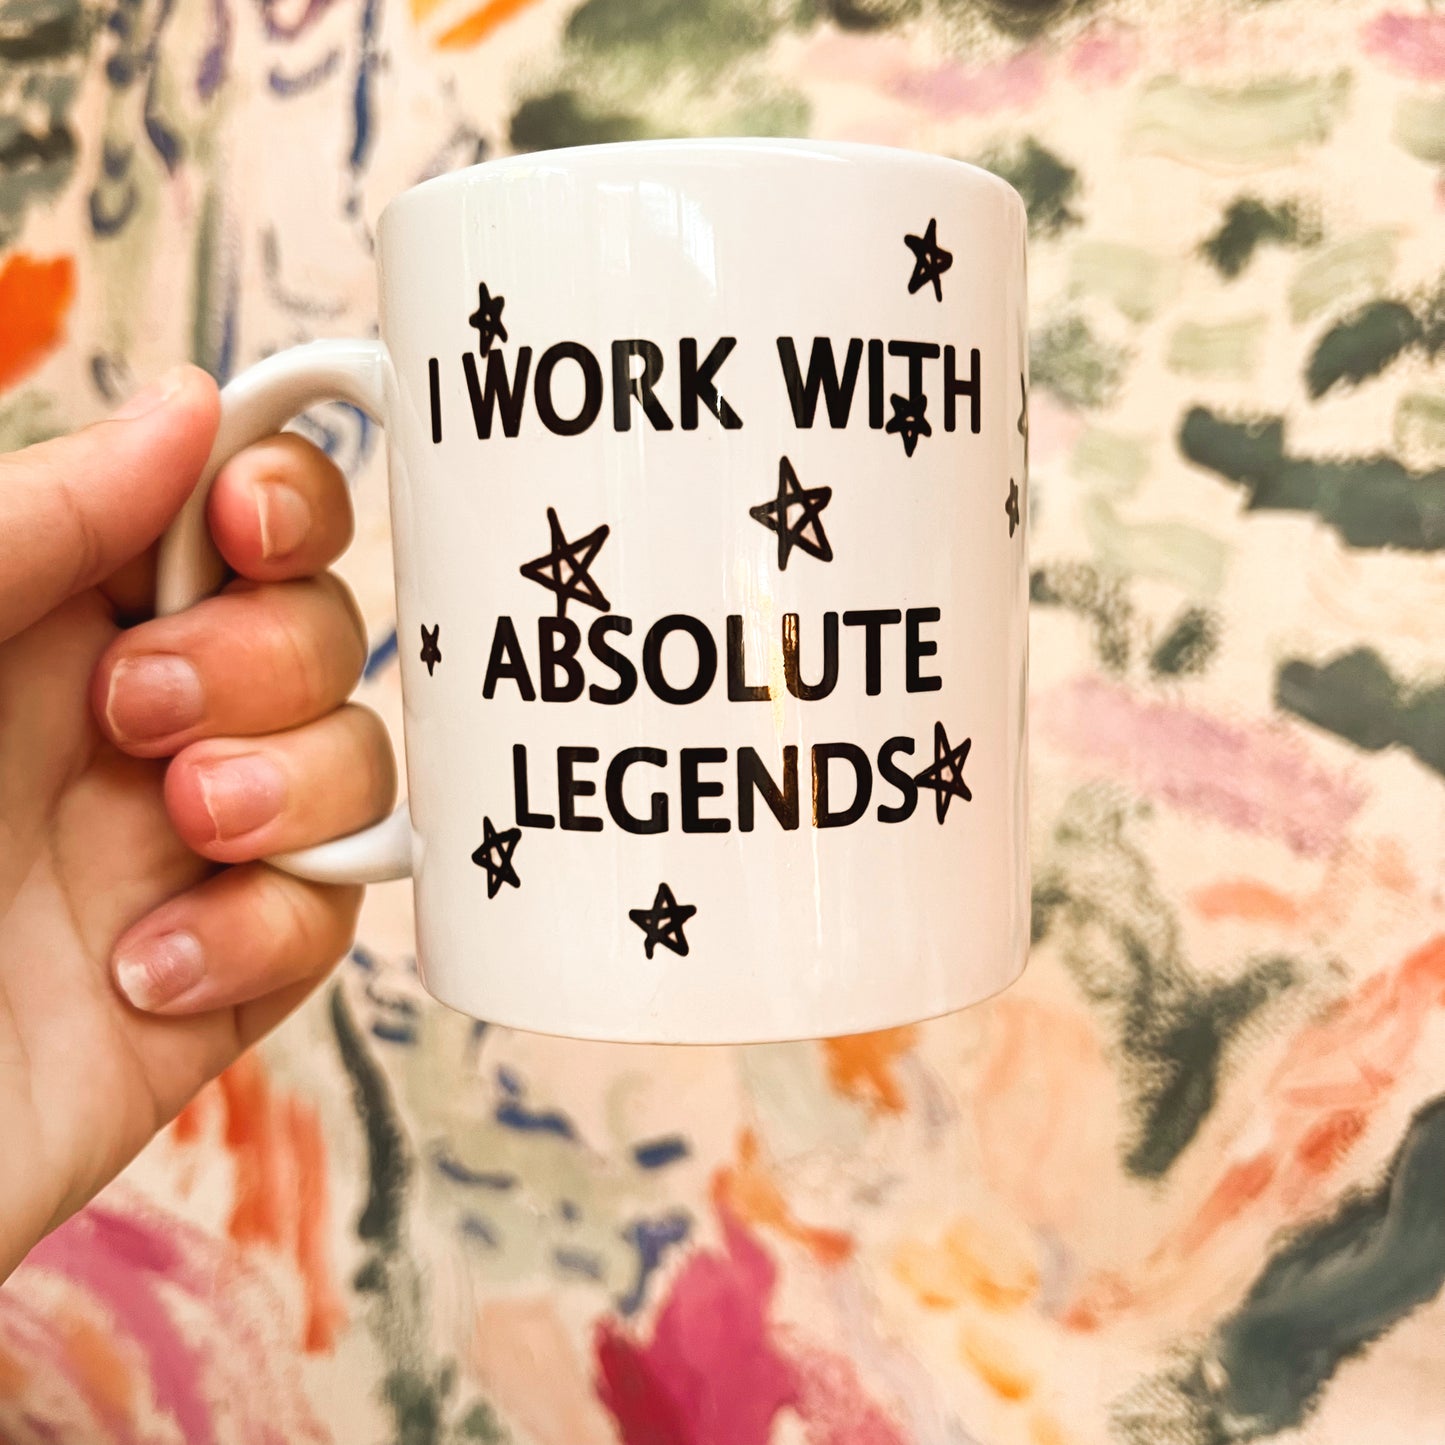 I work with legends mug